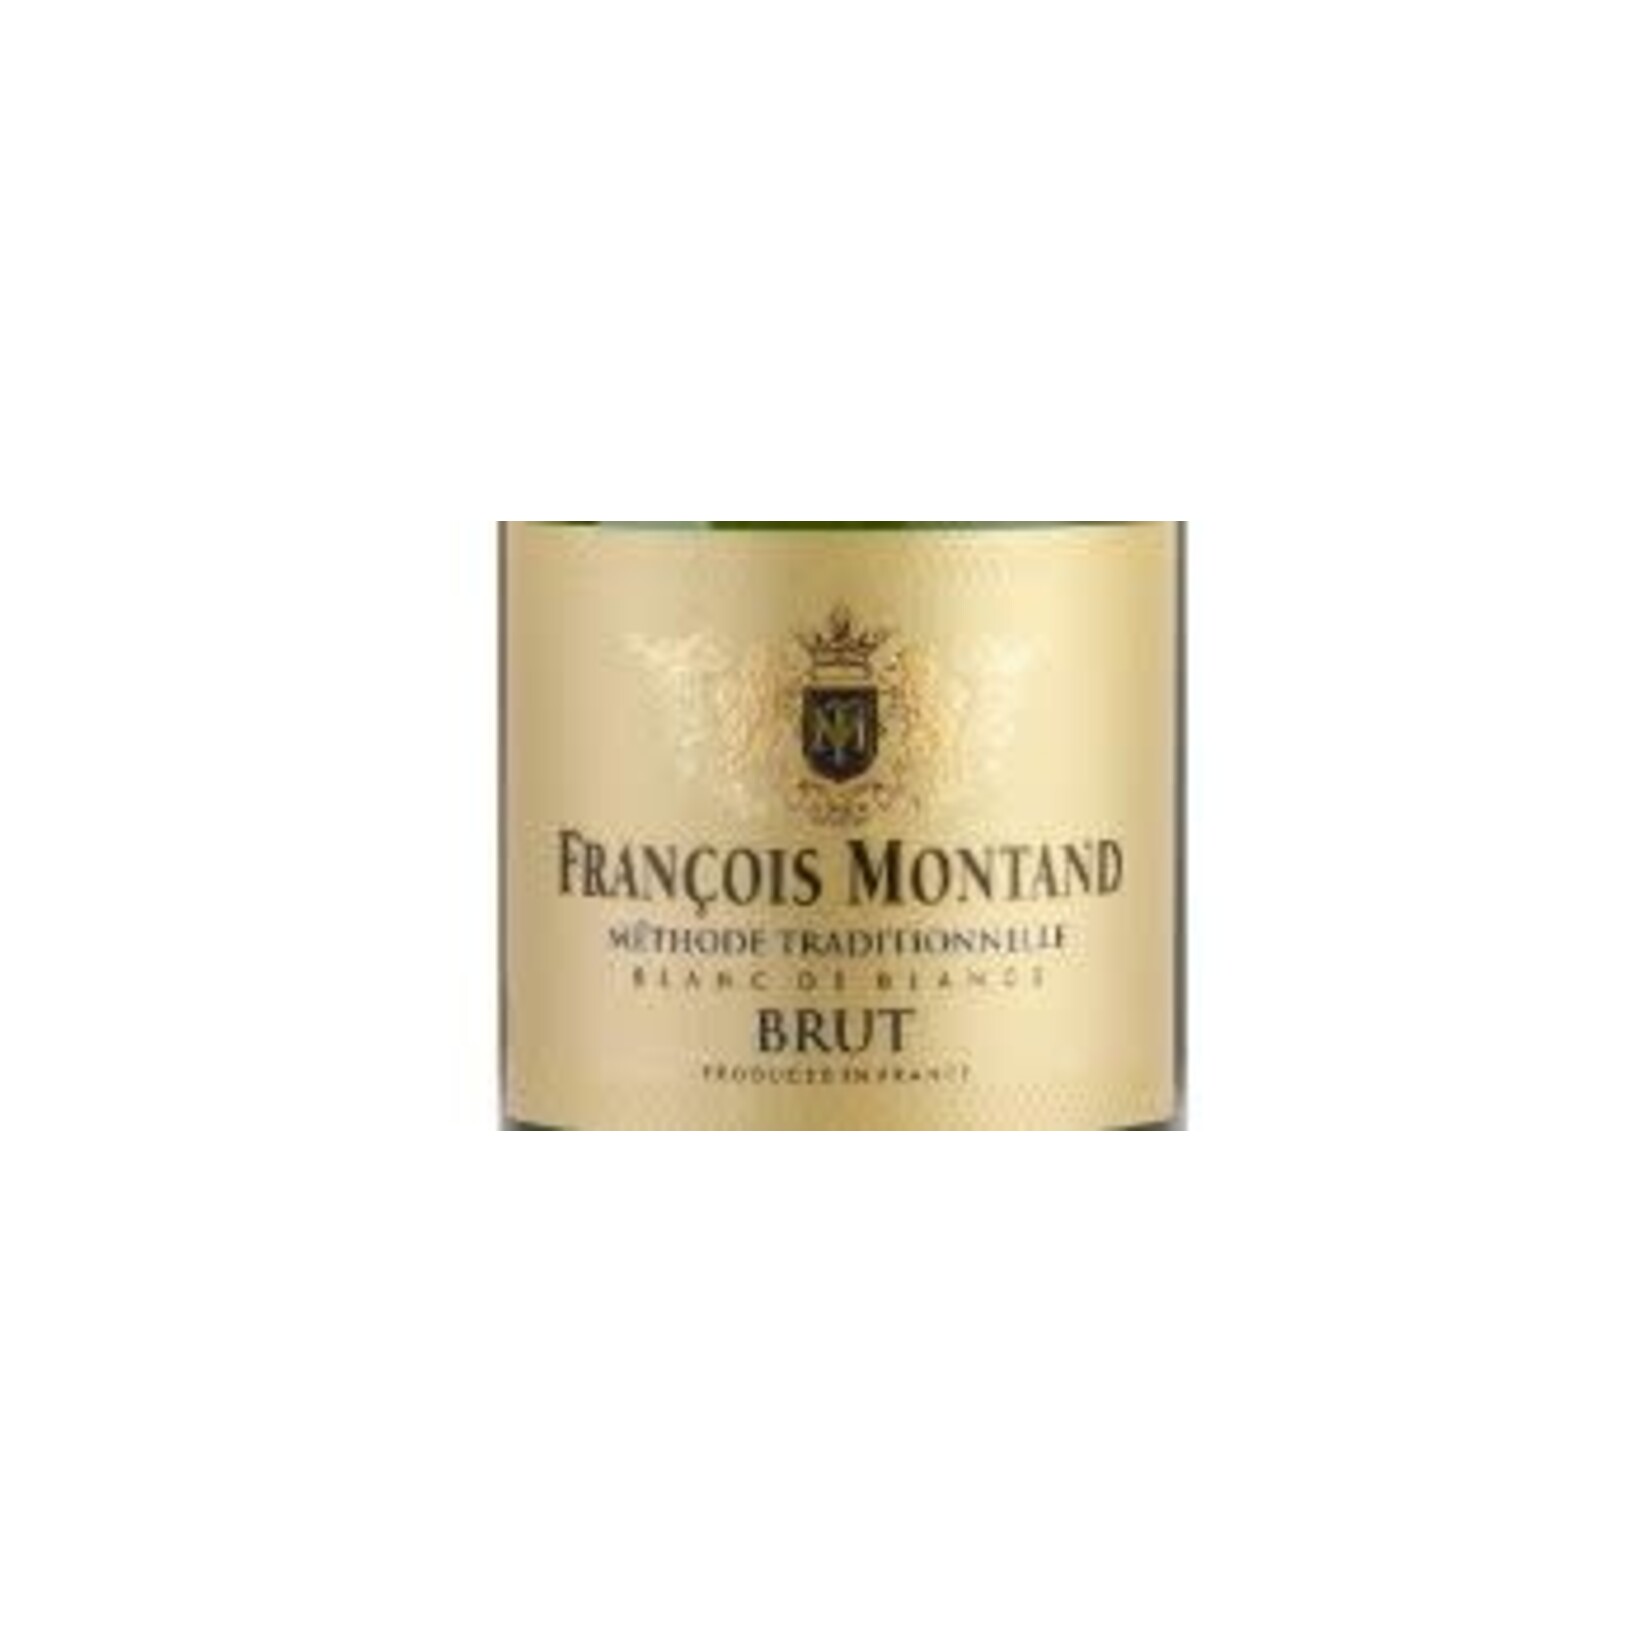 Francois Montand Blanc de Blancs Brut  NV  France